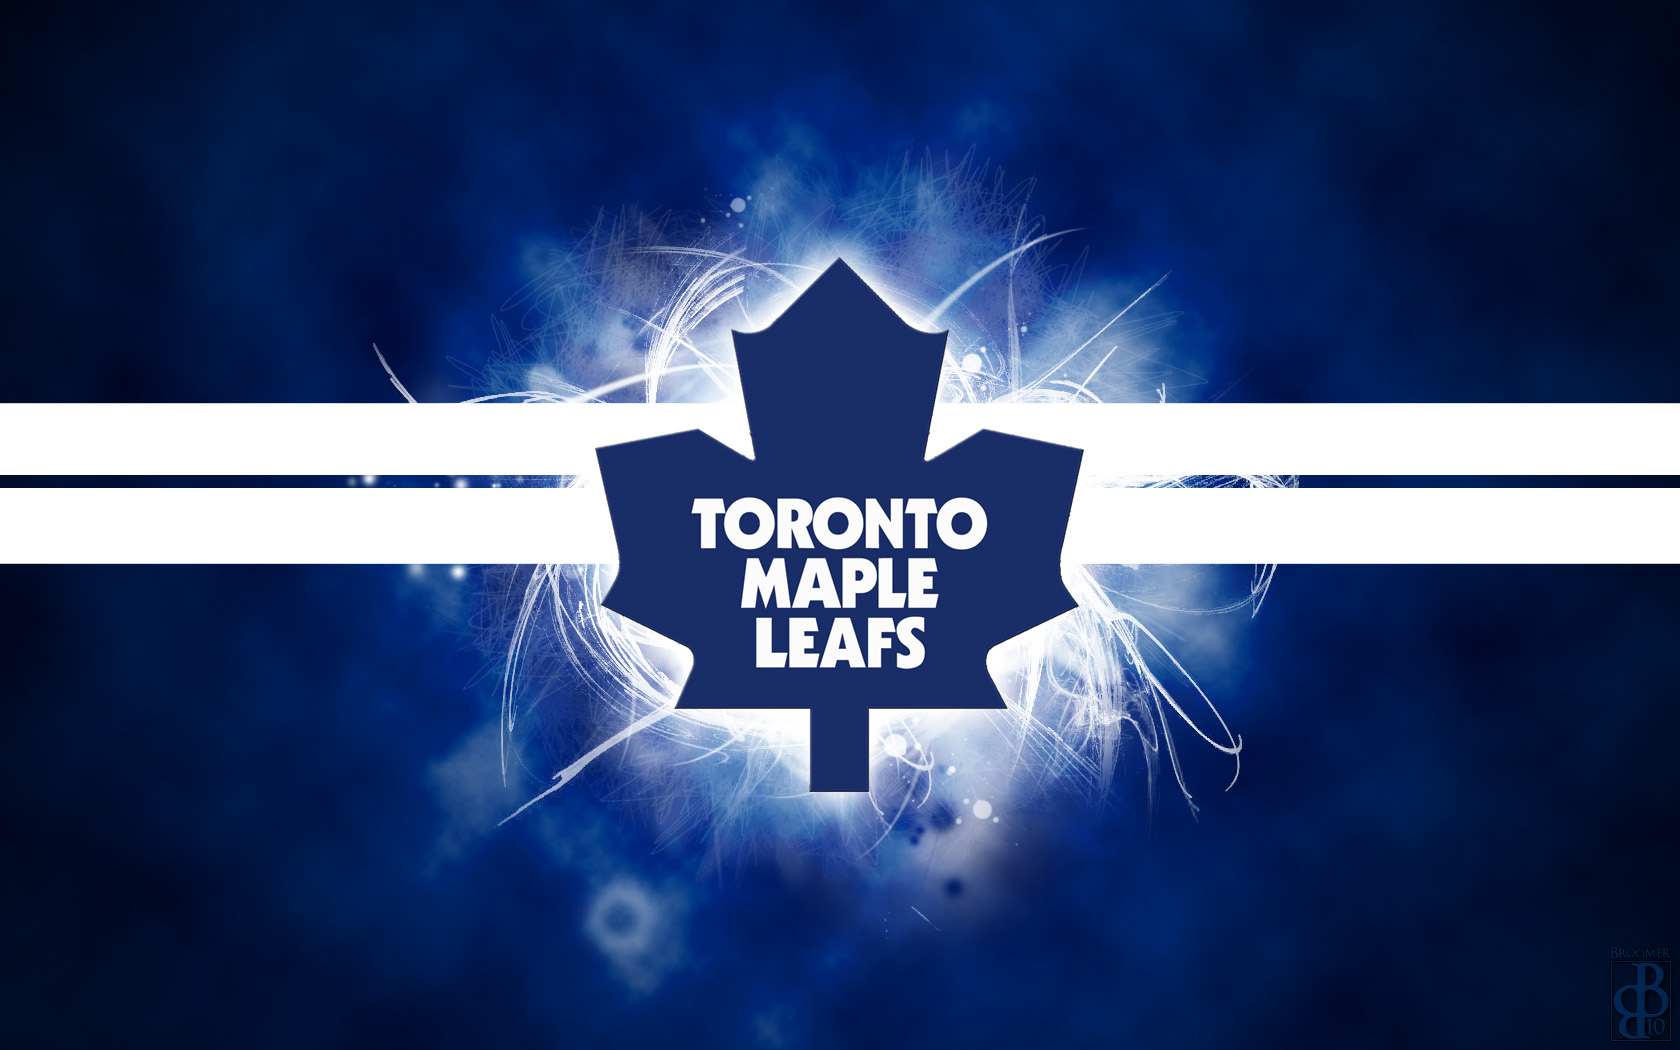 [49+] Toronto Maple Leafs Desktop Wallpaper | WallpaperSafari.com